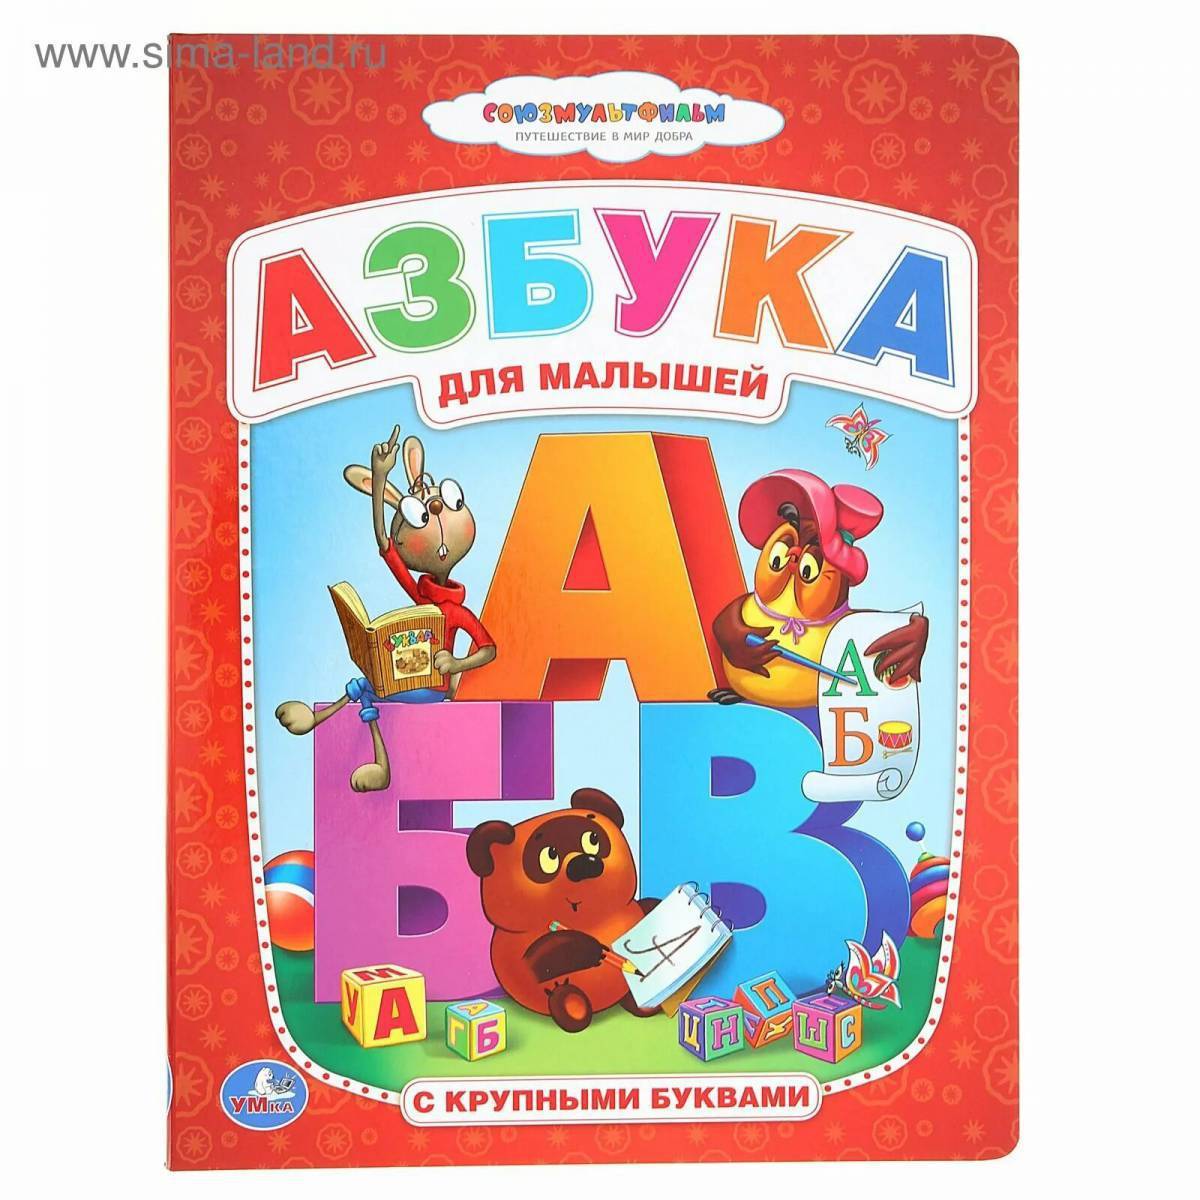 Книжка "Азбука". Азбука для малышей книга. Азбука (обложка). Алфавит книга для детей. Азбука книга картинки